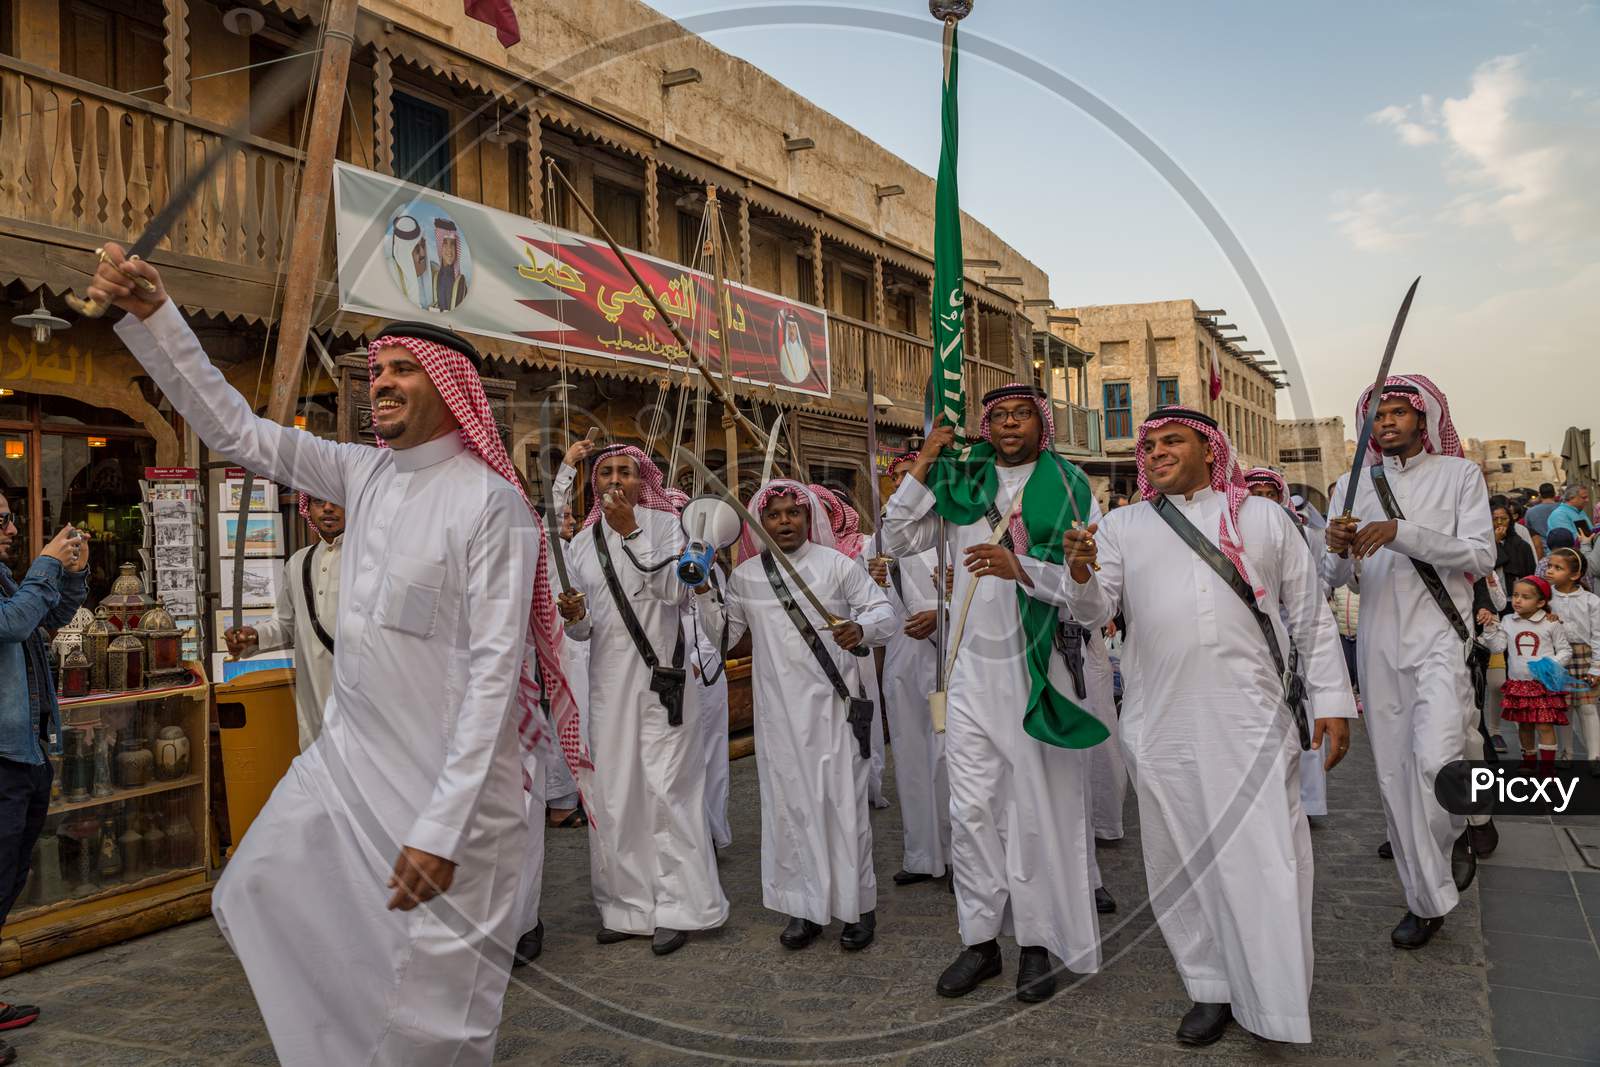 Traditional Arabic folklore dance  from Saudi Arabia in Souk Waqif spring festival,Doha Qatar